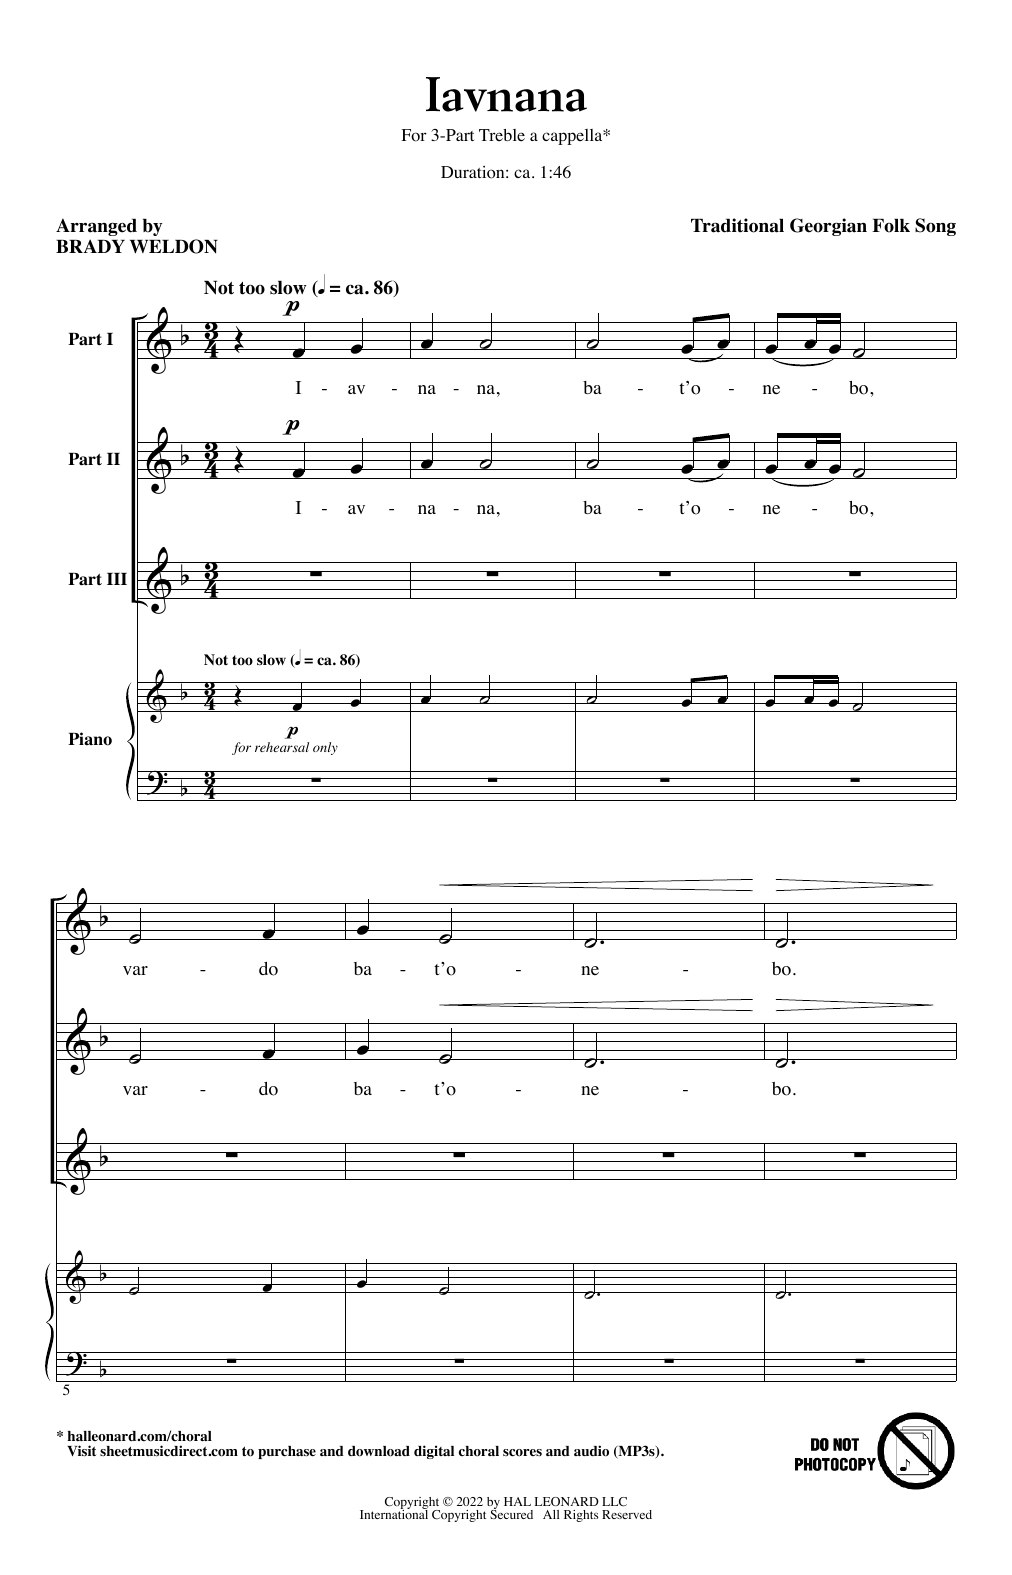 Download Traditional Georgian Folk Song Iavnana (arr. Brady Weldon) Sheet Music and learn how to play 3-Part Treble Choir PDF digital score in minutes